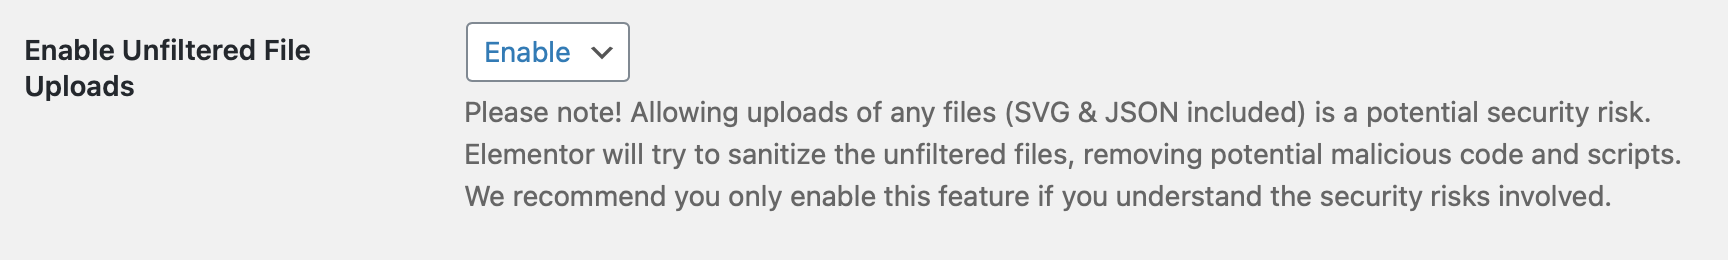 Enable-Unfiltered-File-Uploads